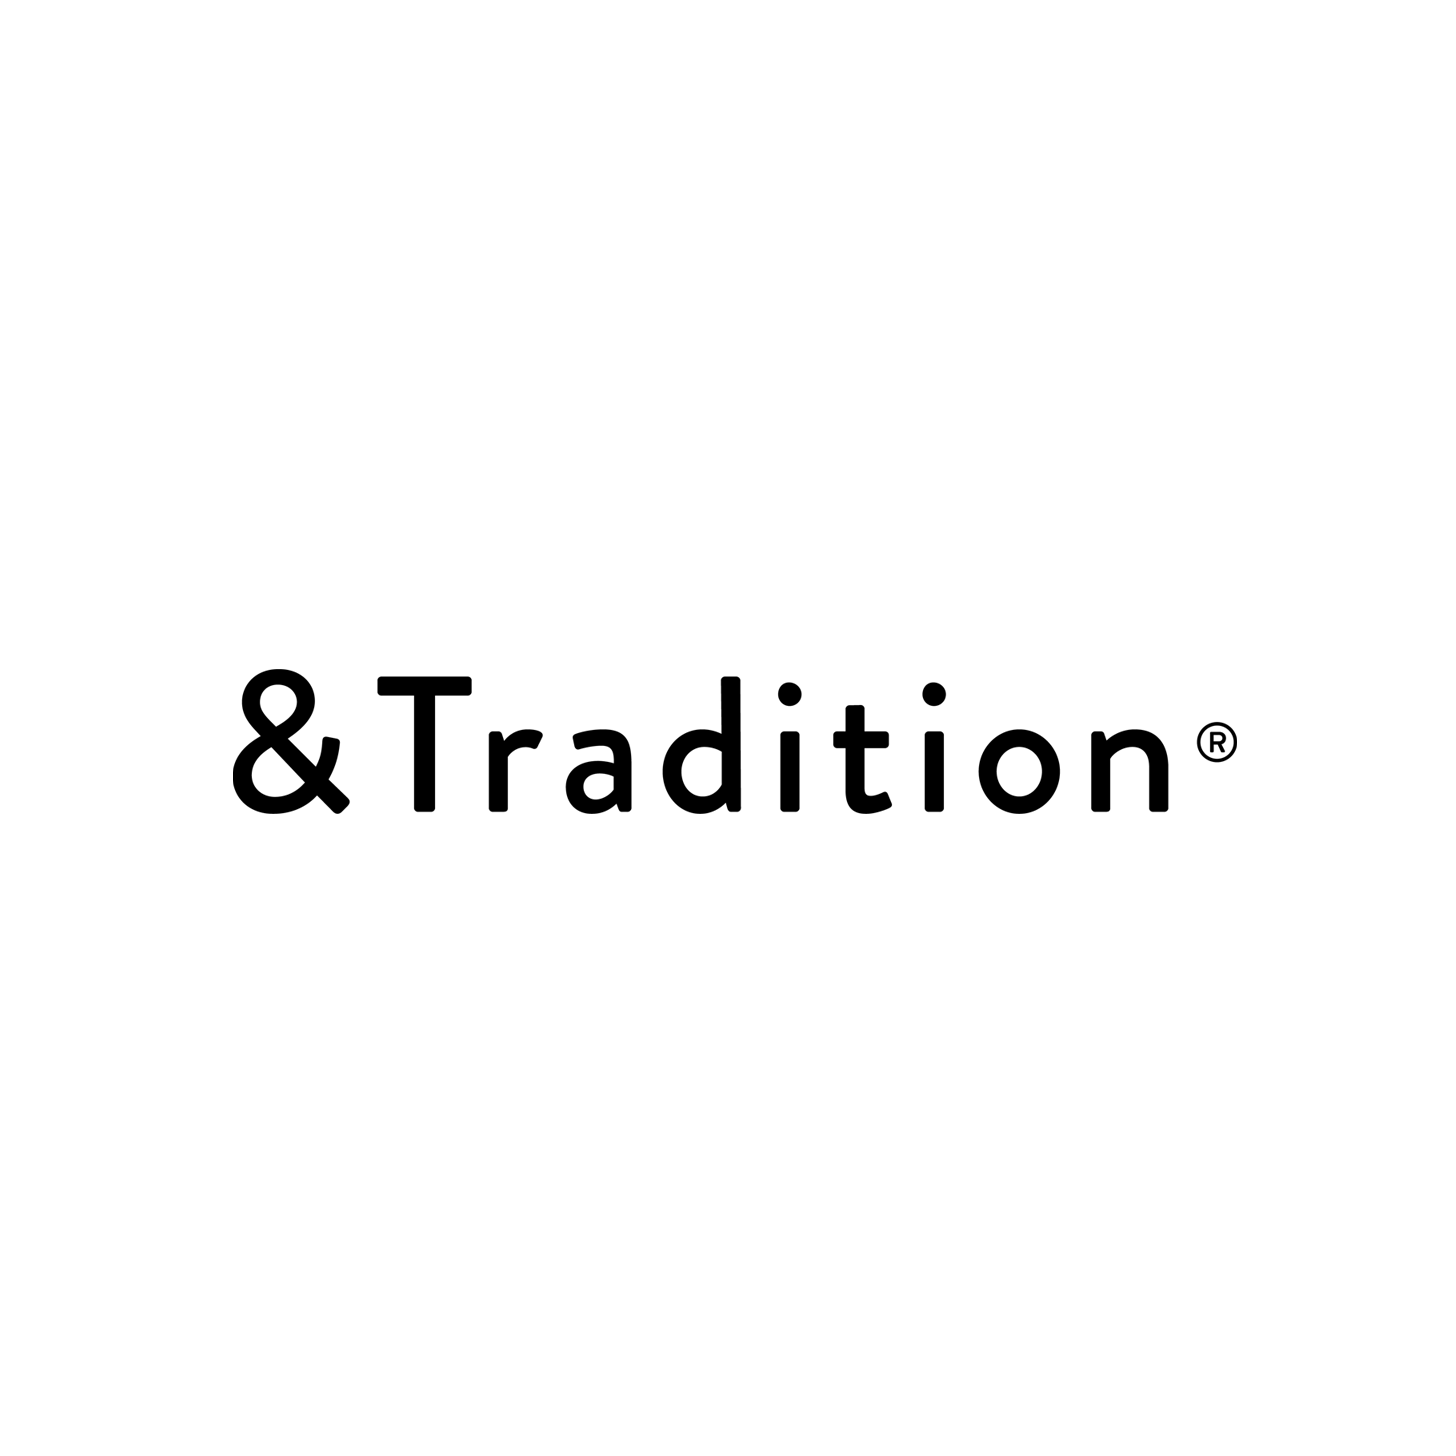 &#038;tradition